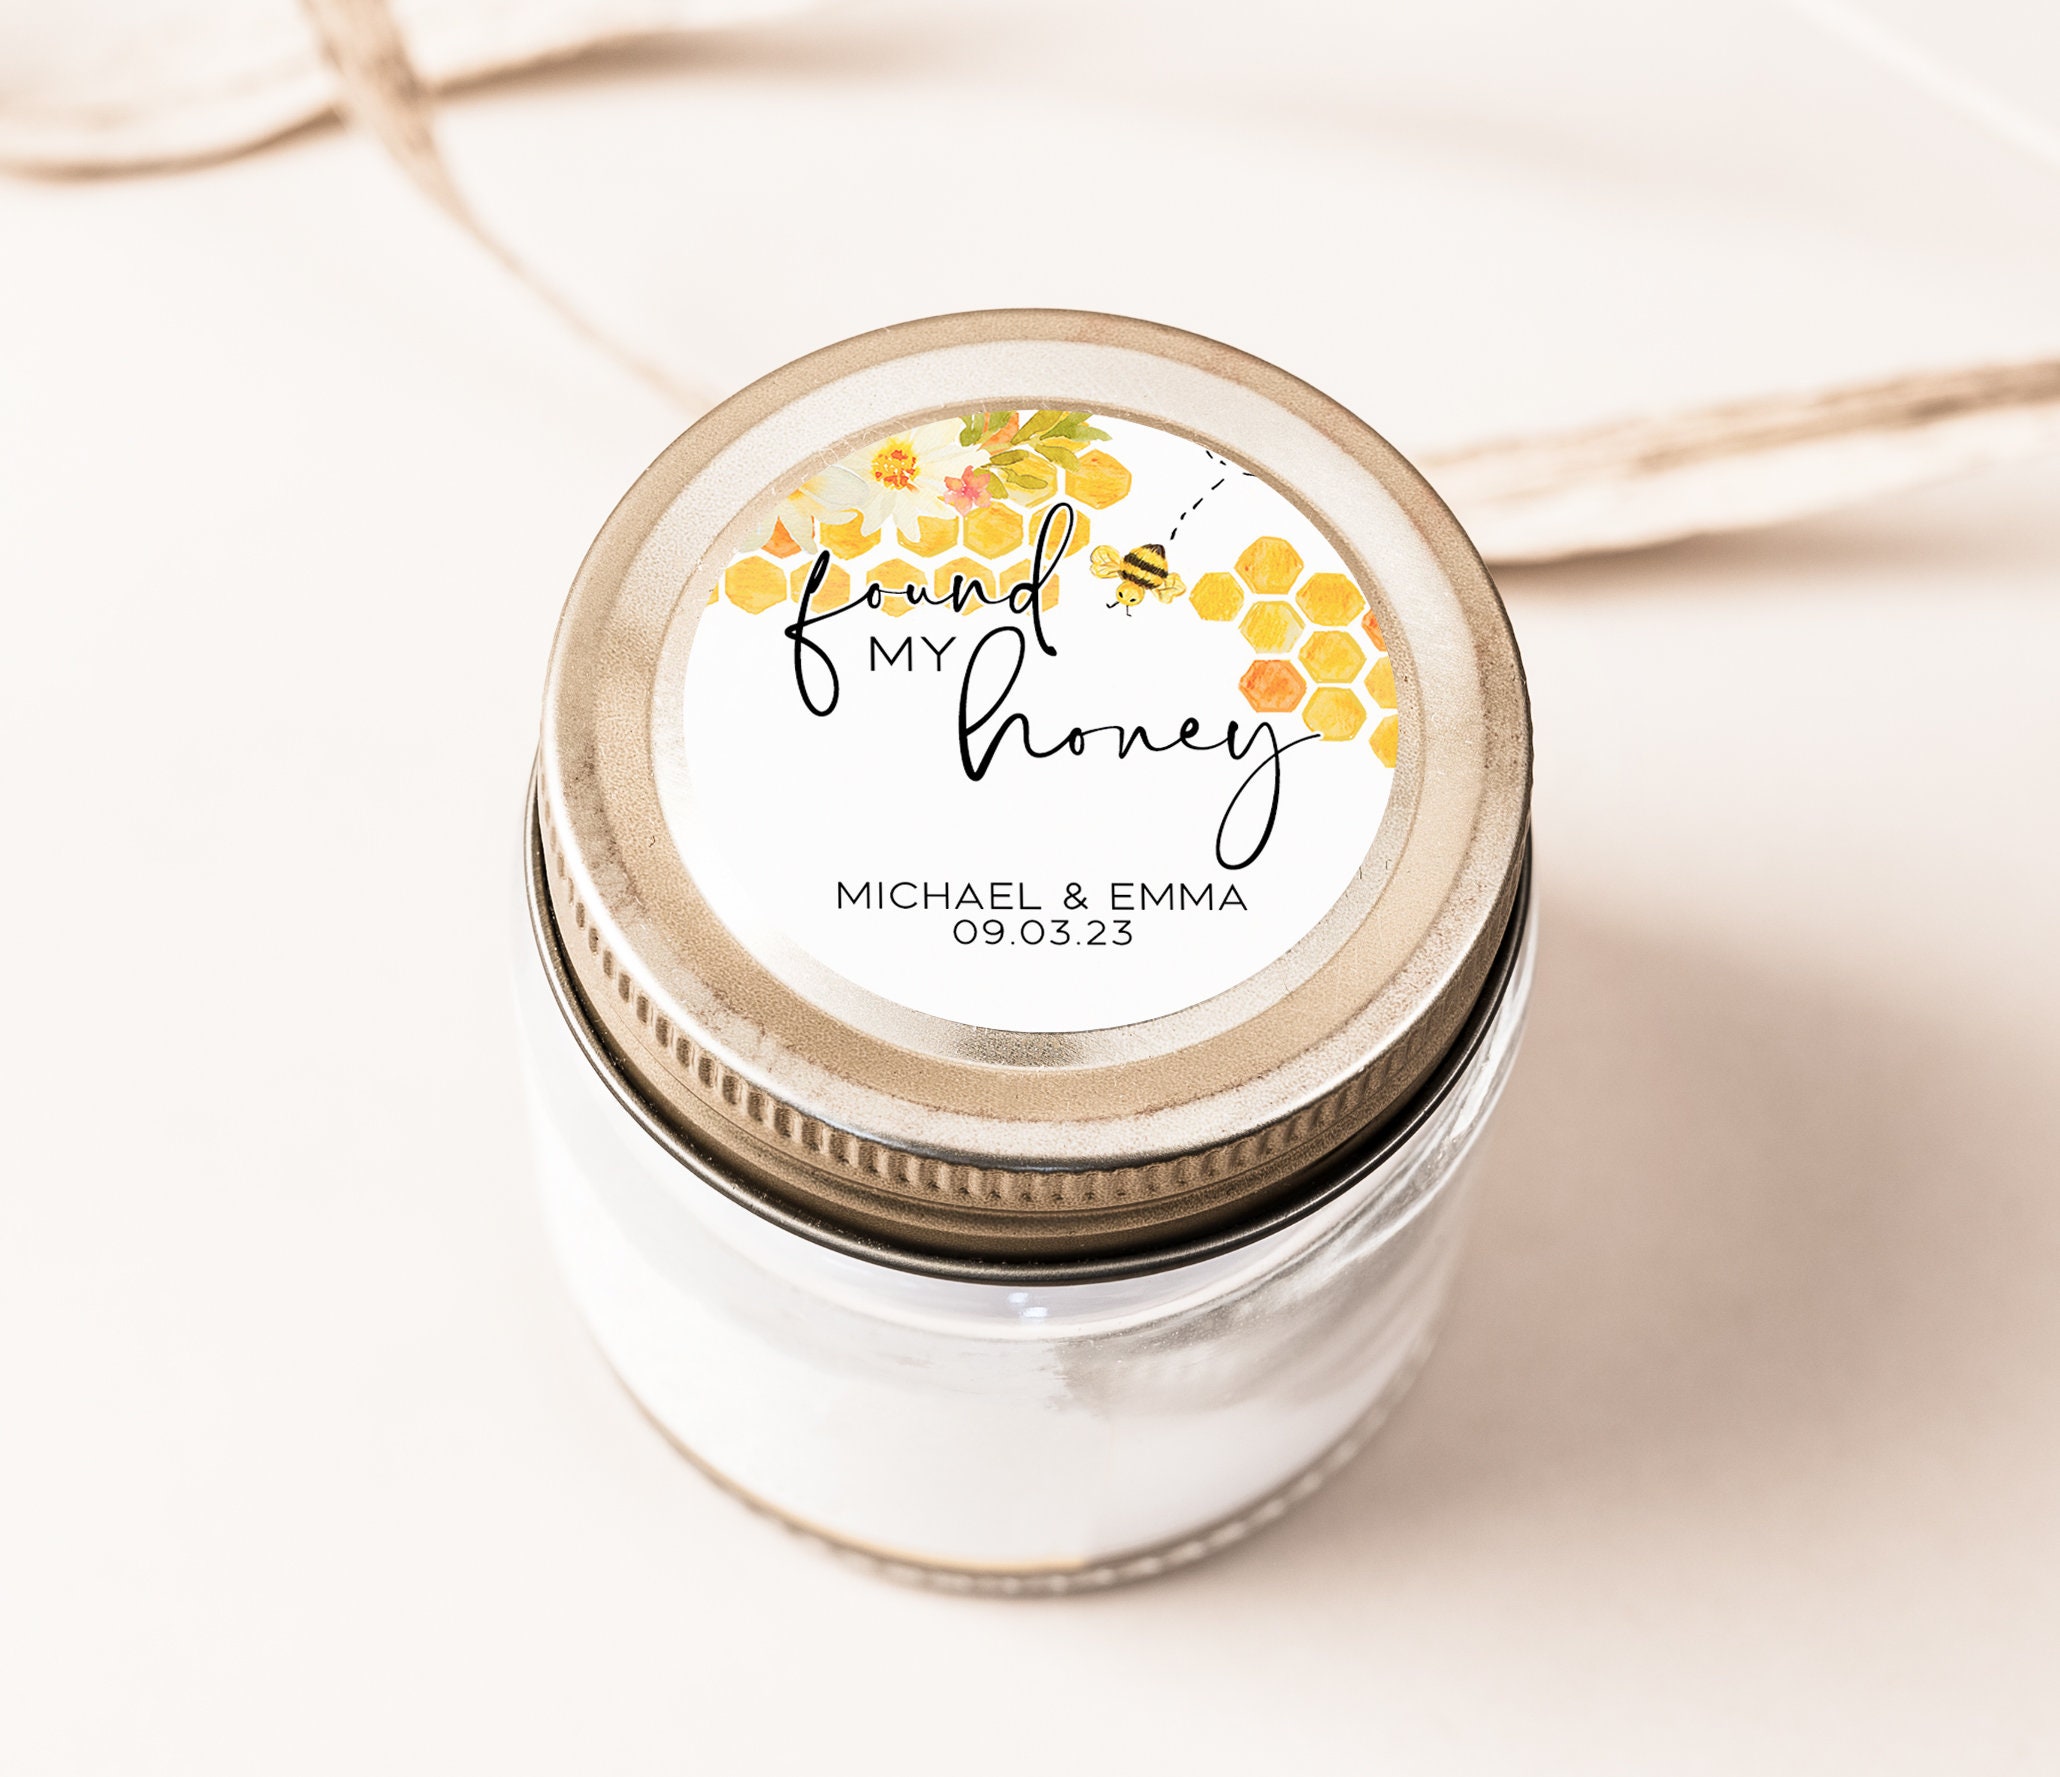 Mini honey jars 1 DOZEN - TruBee Honey